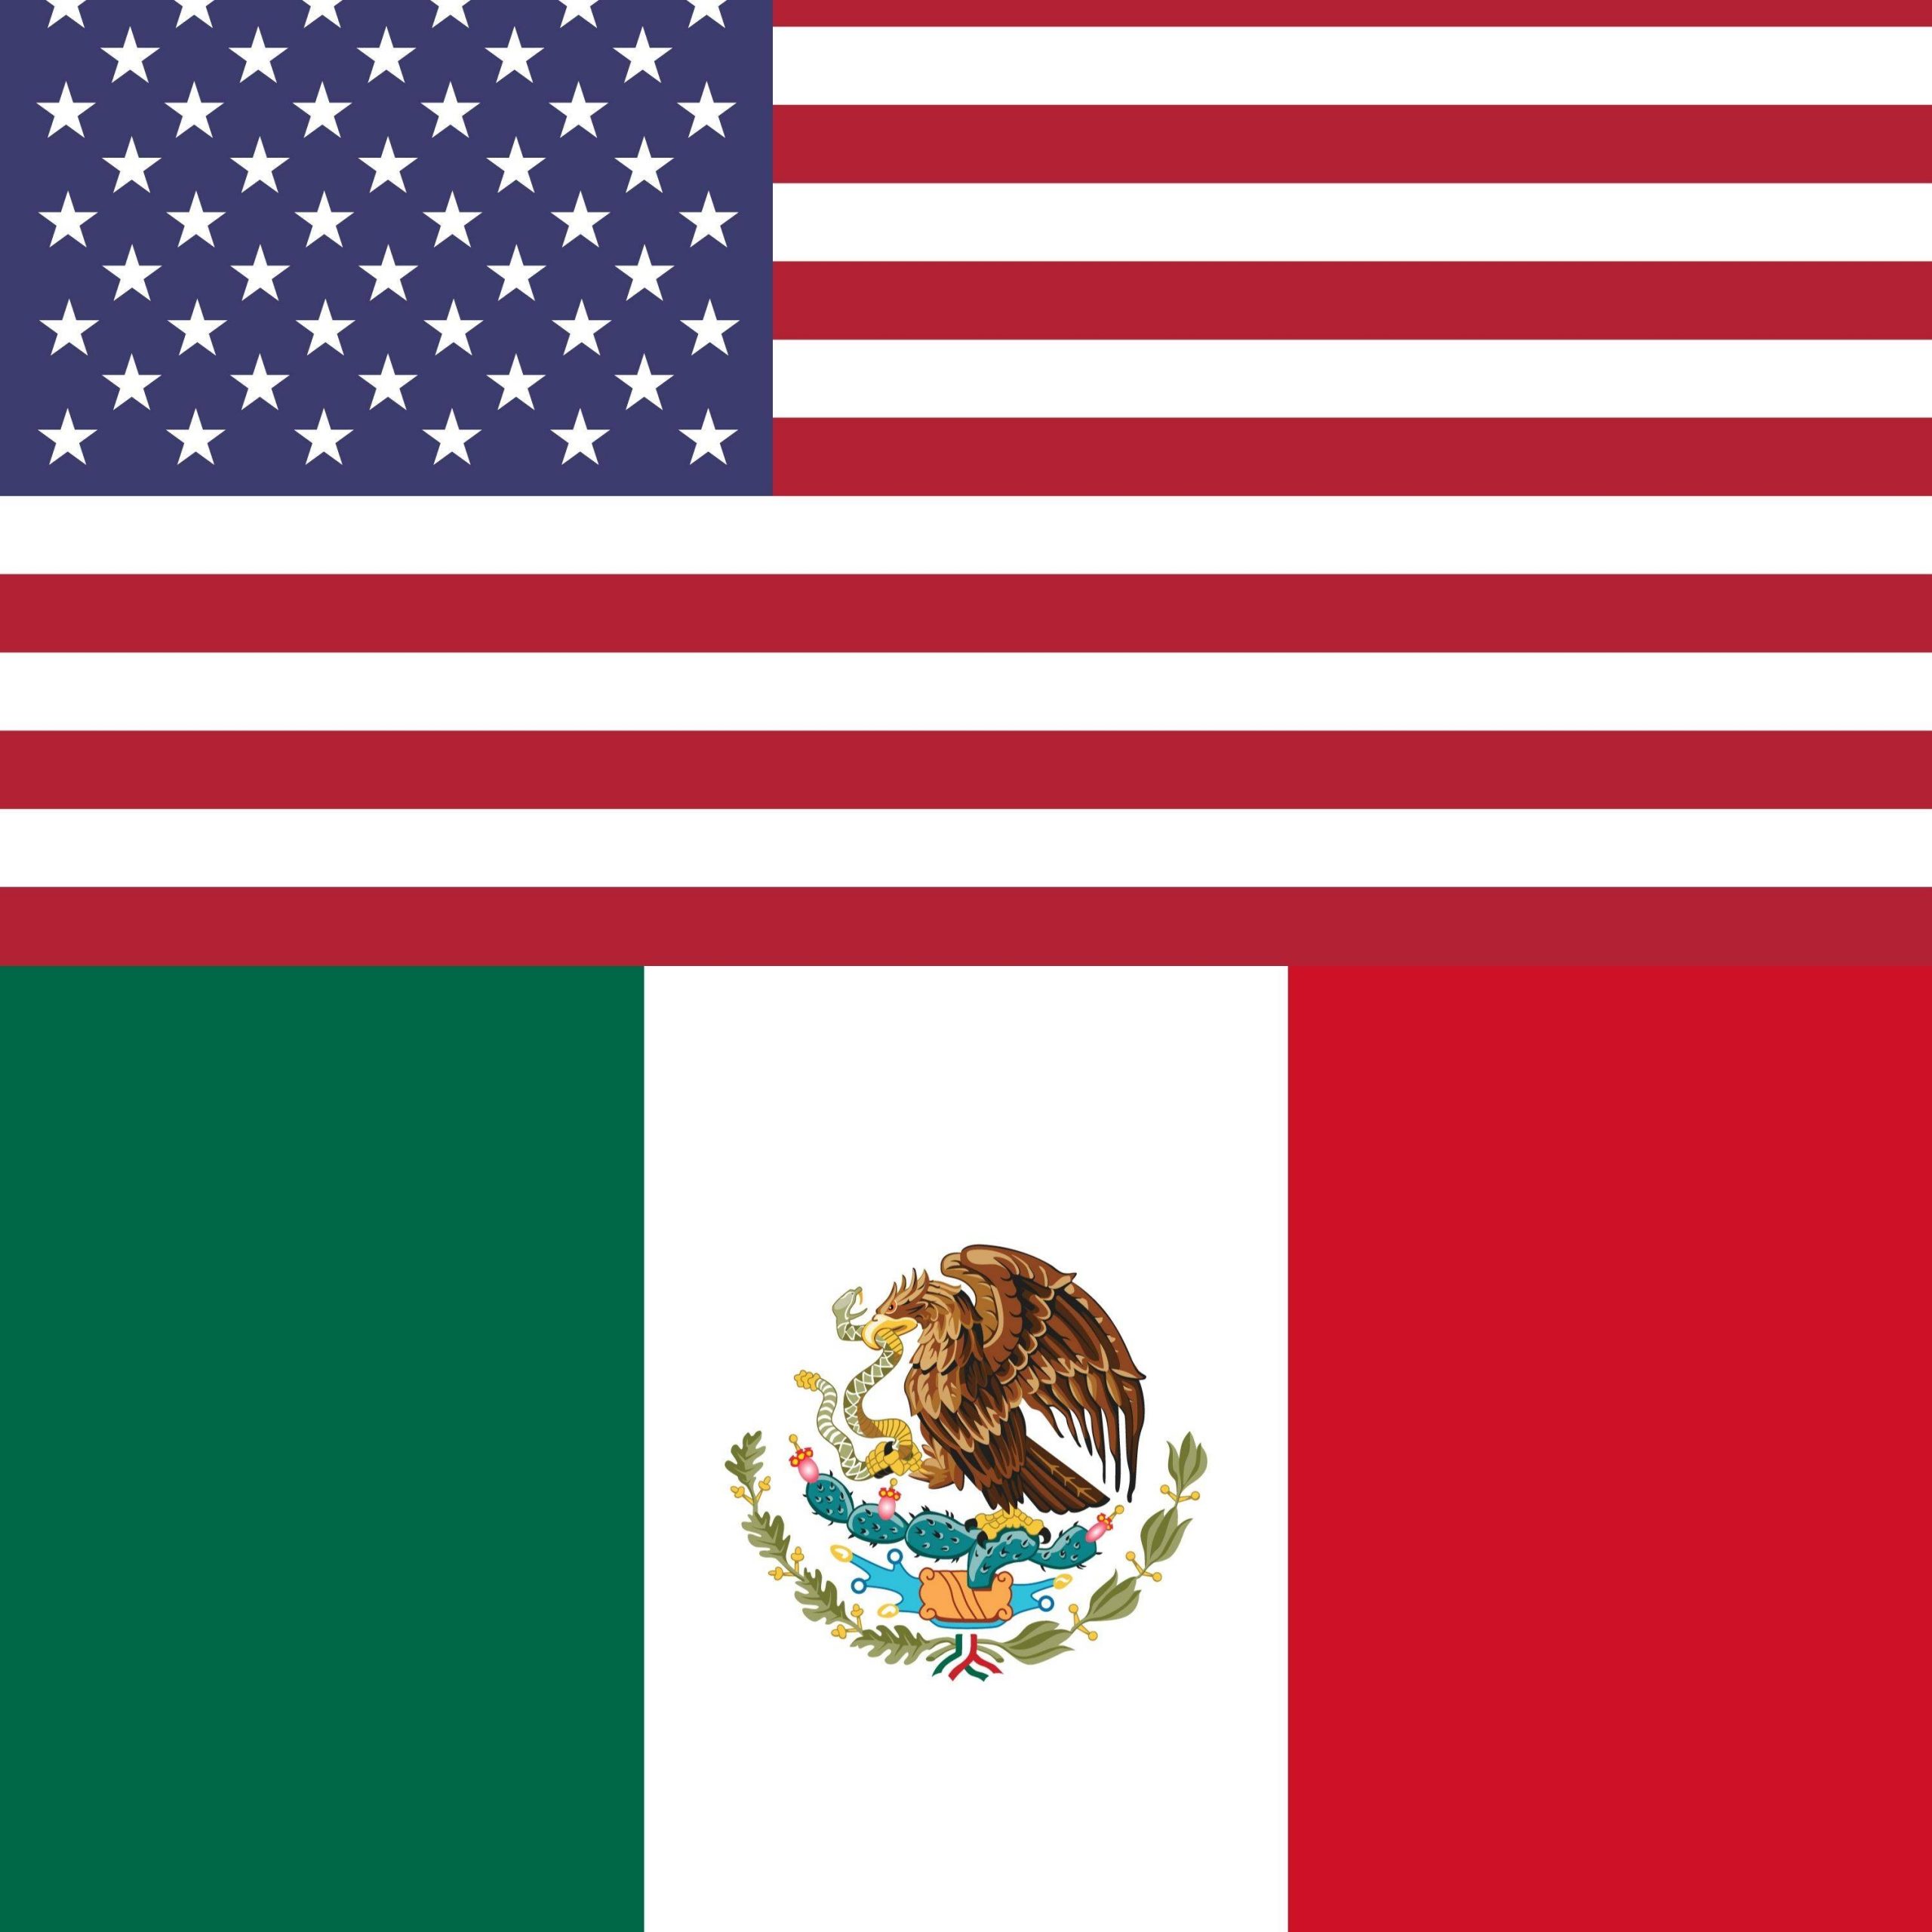 United States vs Mexico